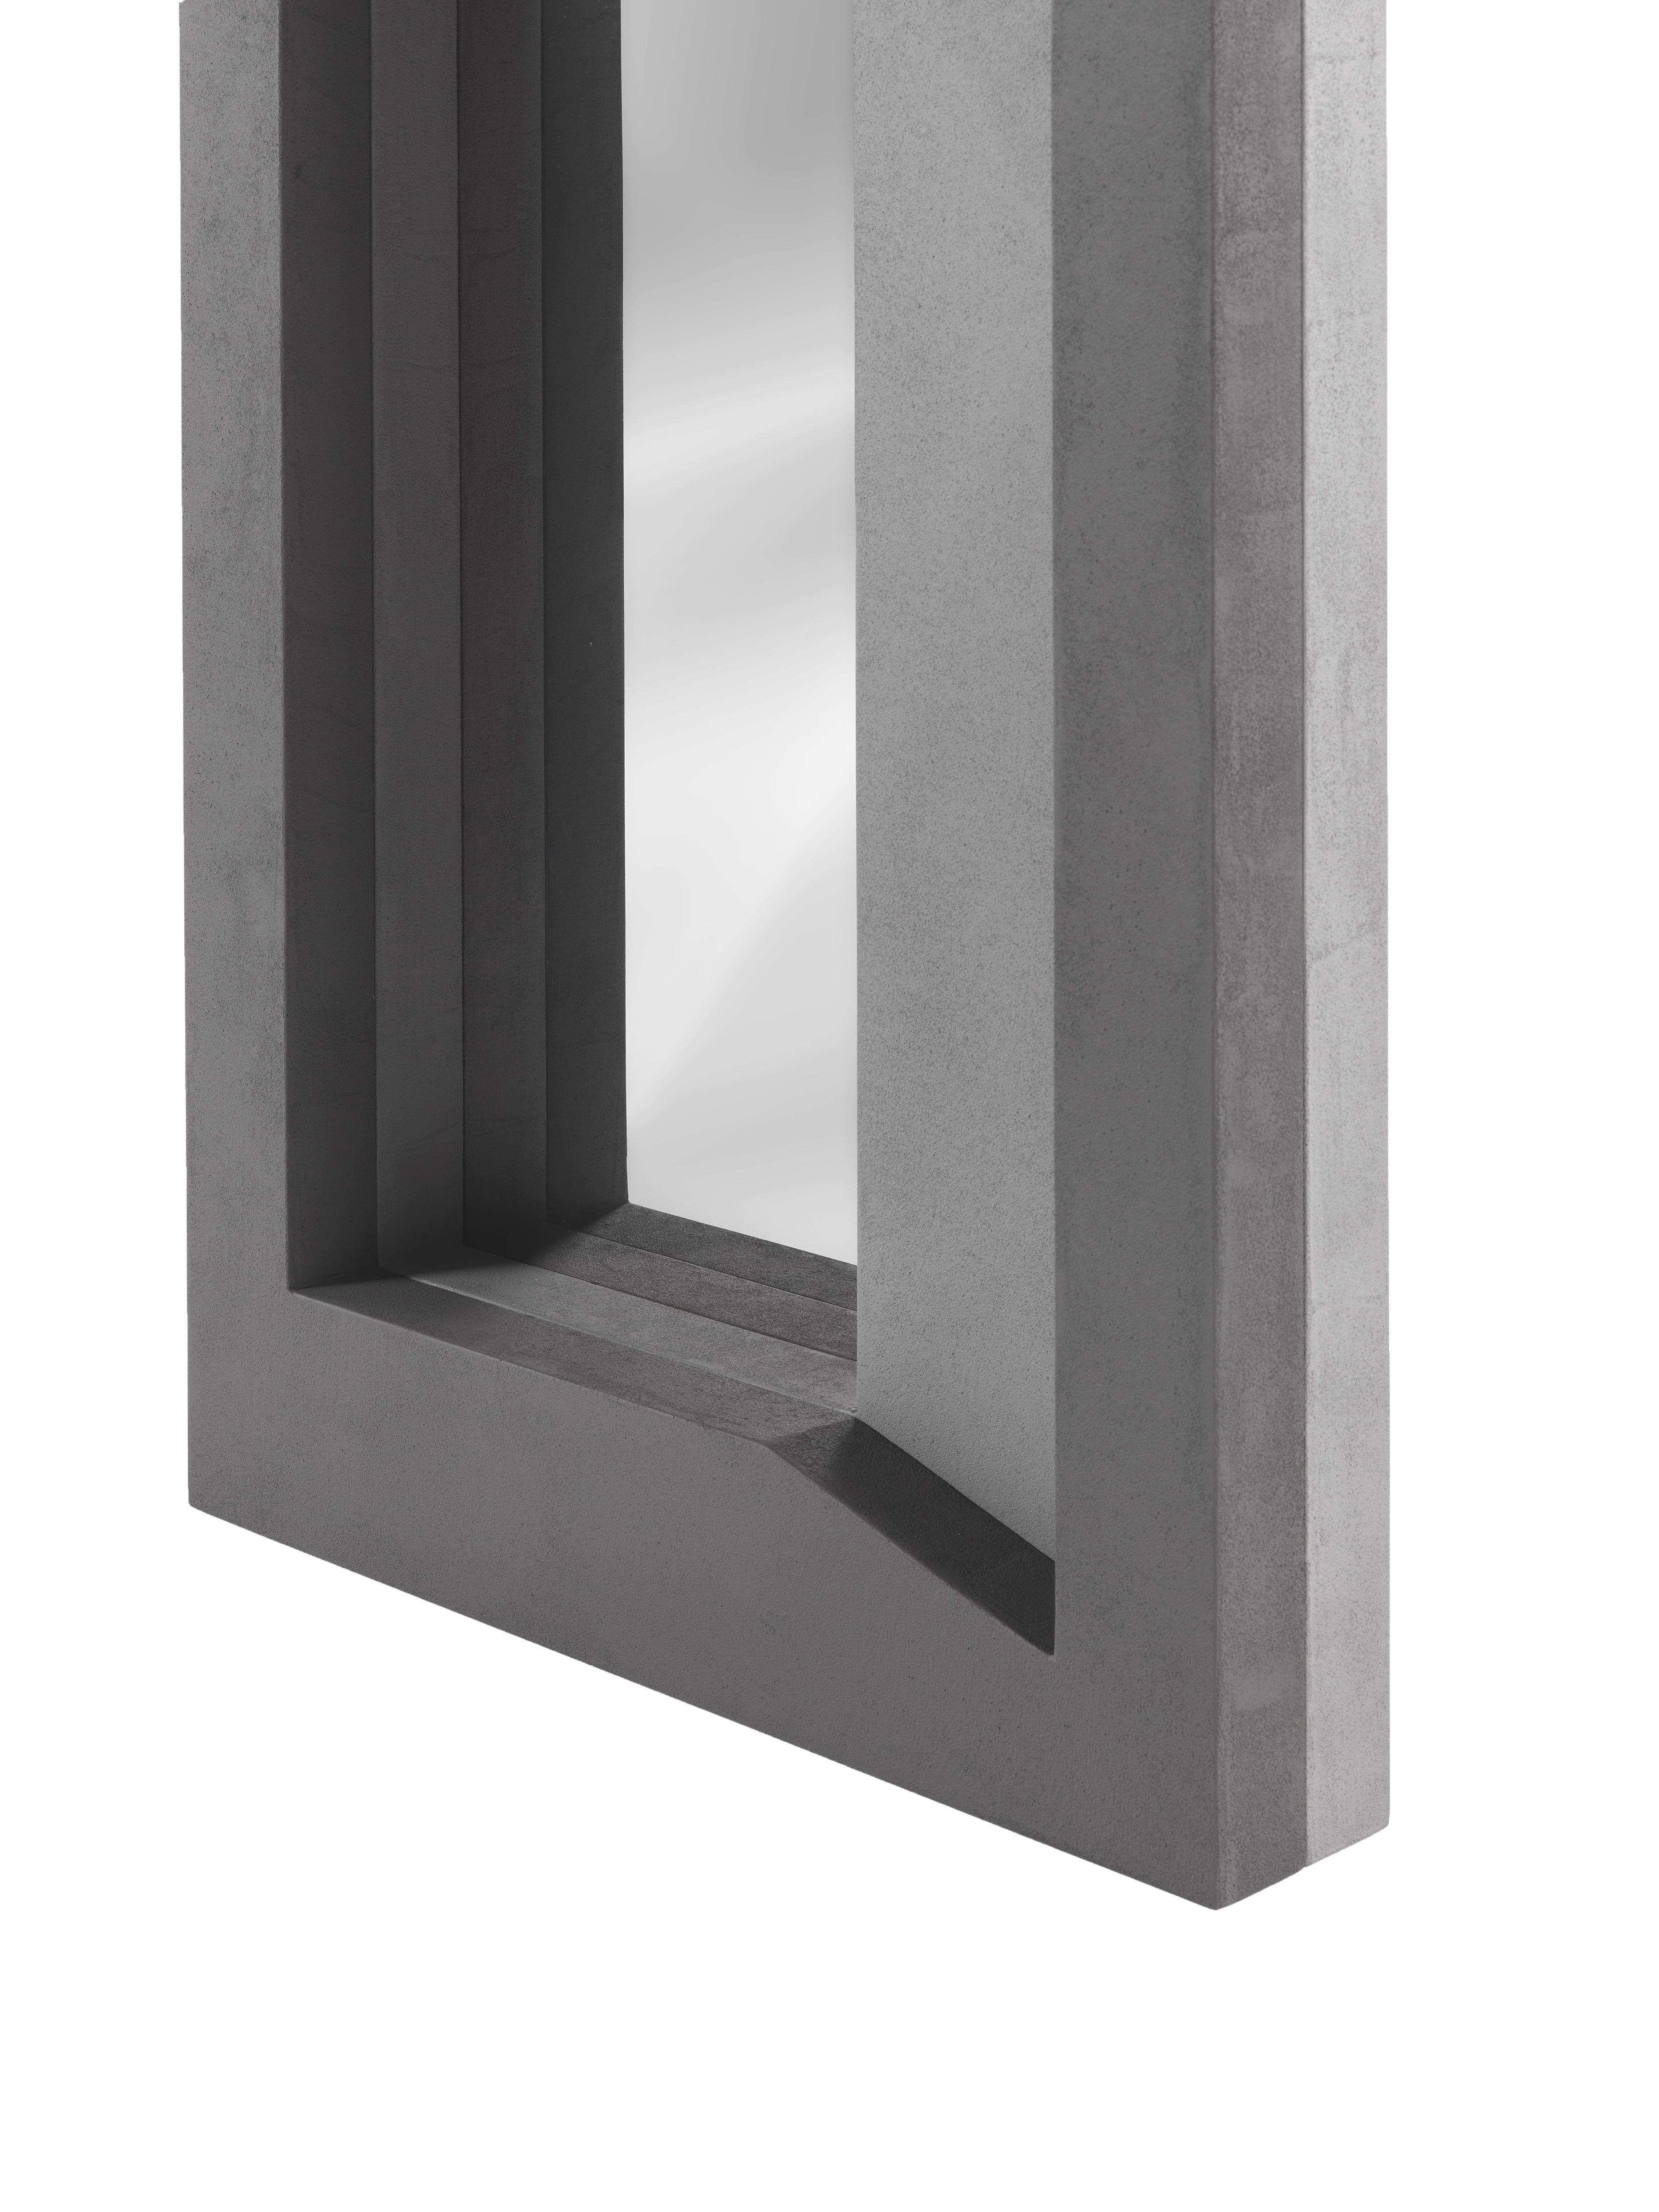 Italian 21st Century Undism Mirror in Wood by Gumdesign For Sale